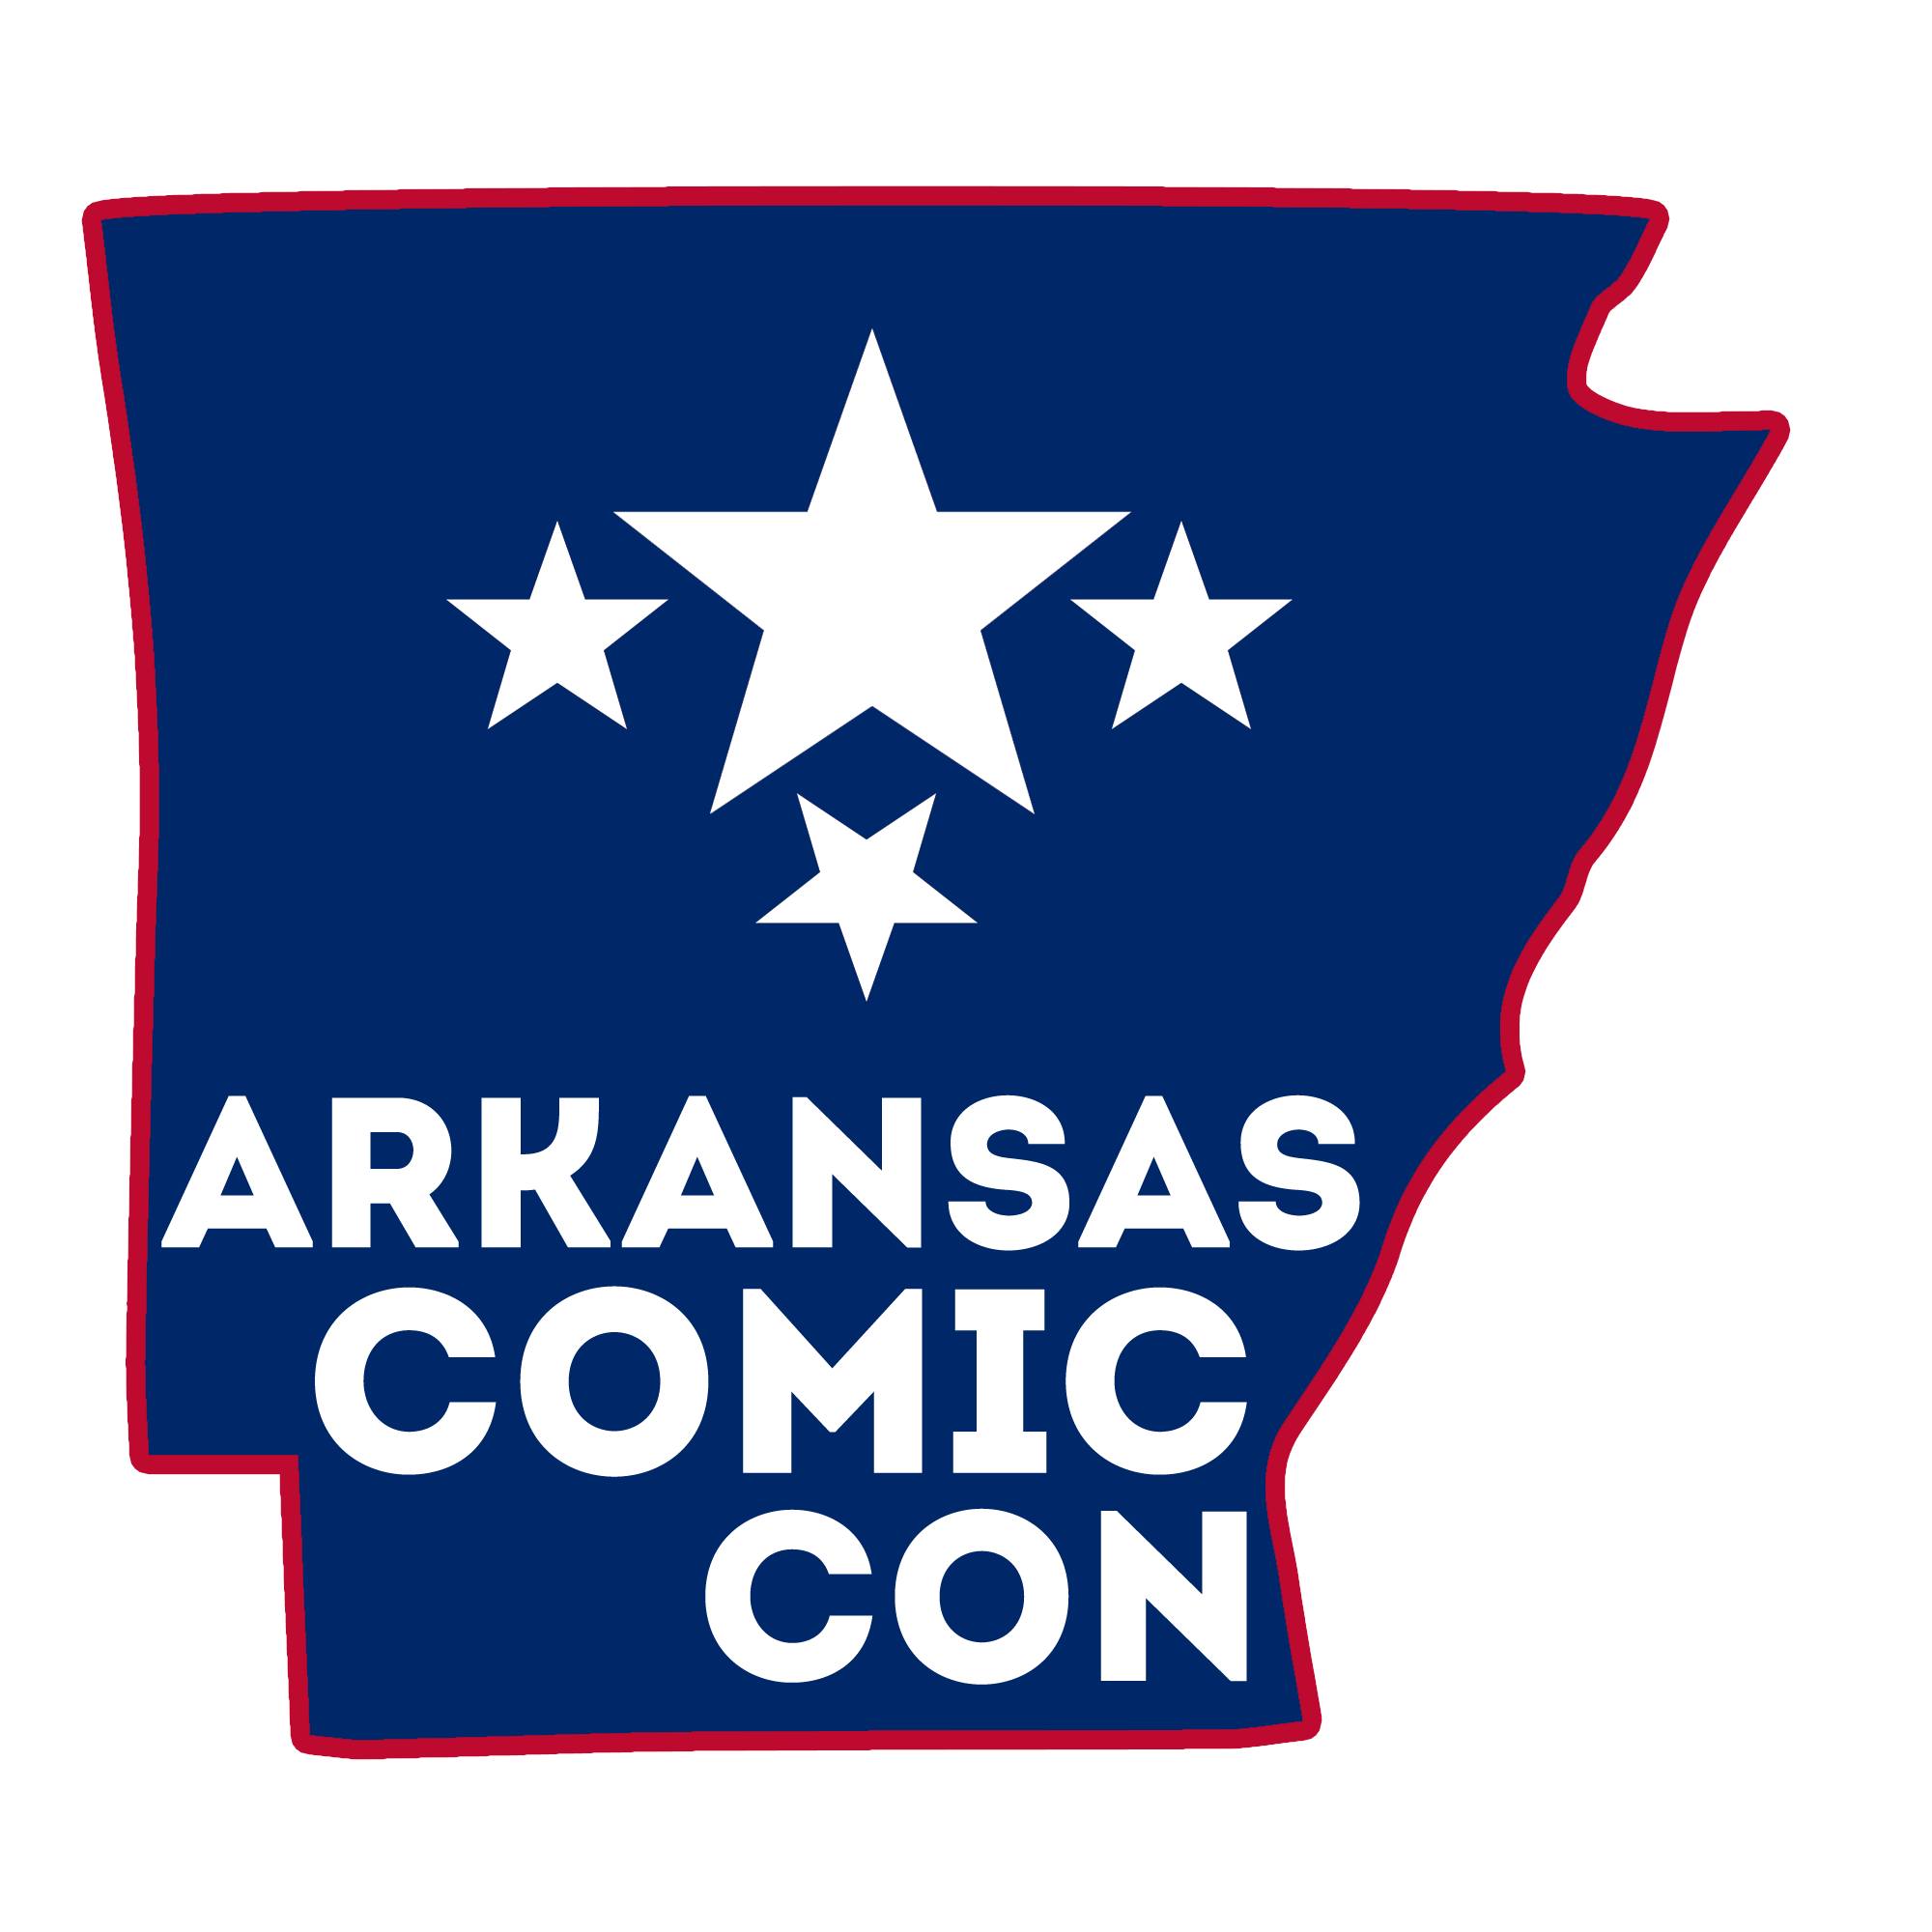 Anime event being held in Northwest Arkansas | 5newsonline.com